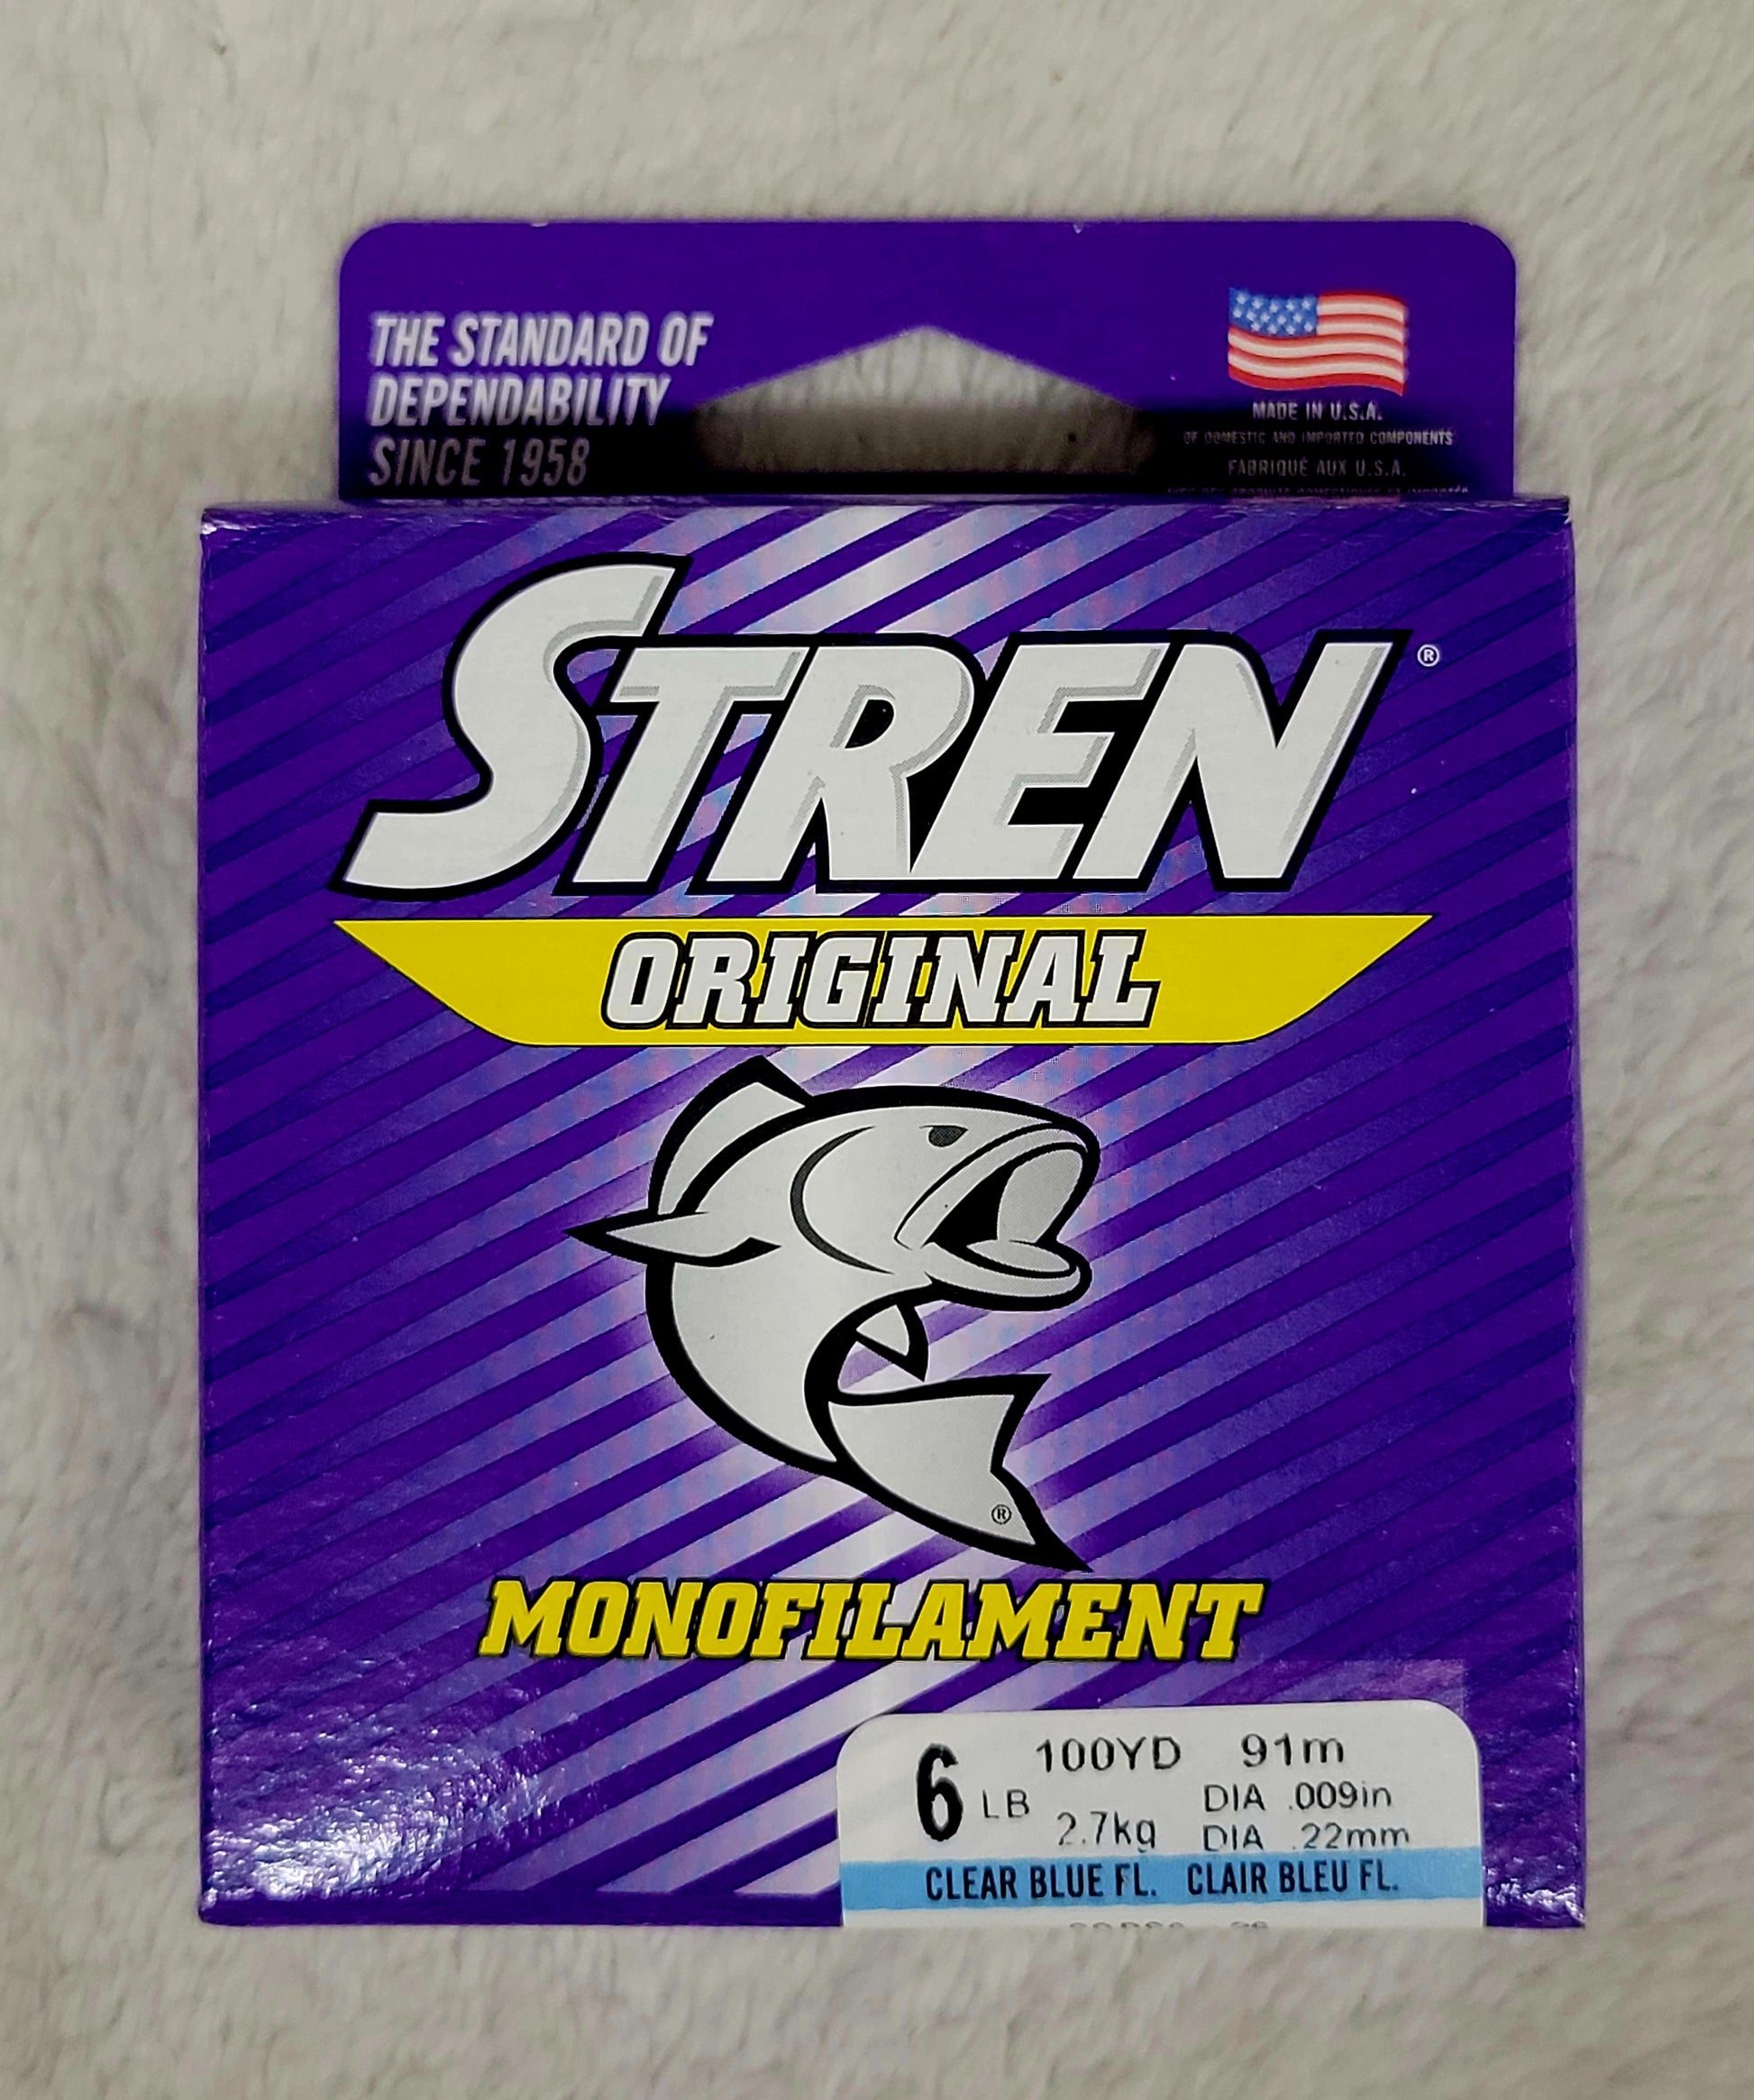 Stren Original Monofilament Fishing Line 12 lb / Clear/Blue Fluorescent / 330yd